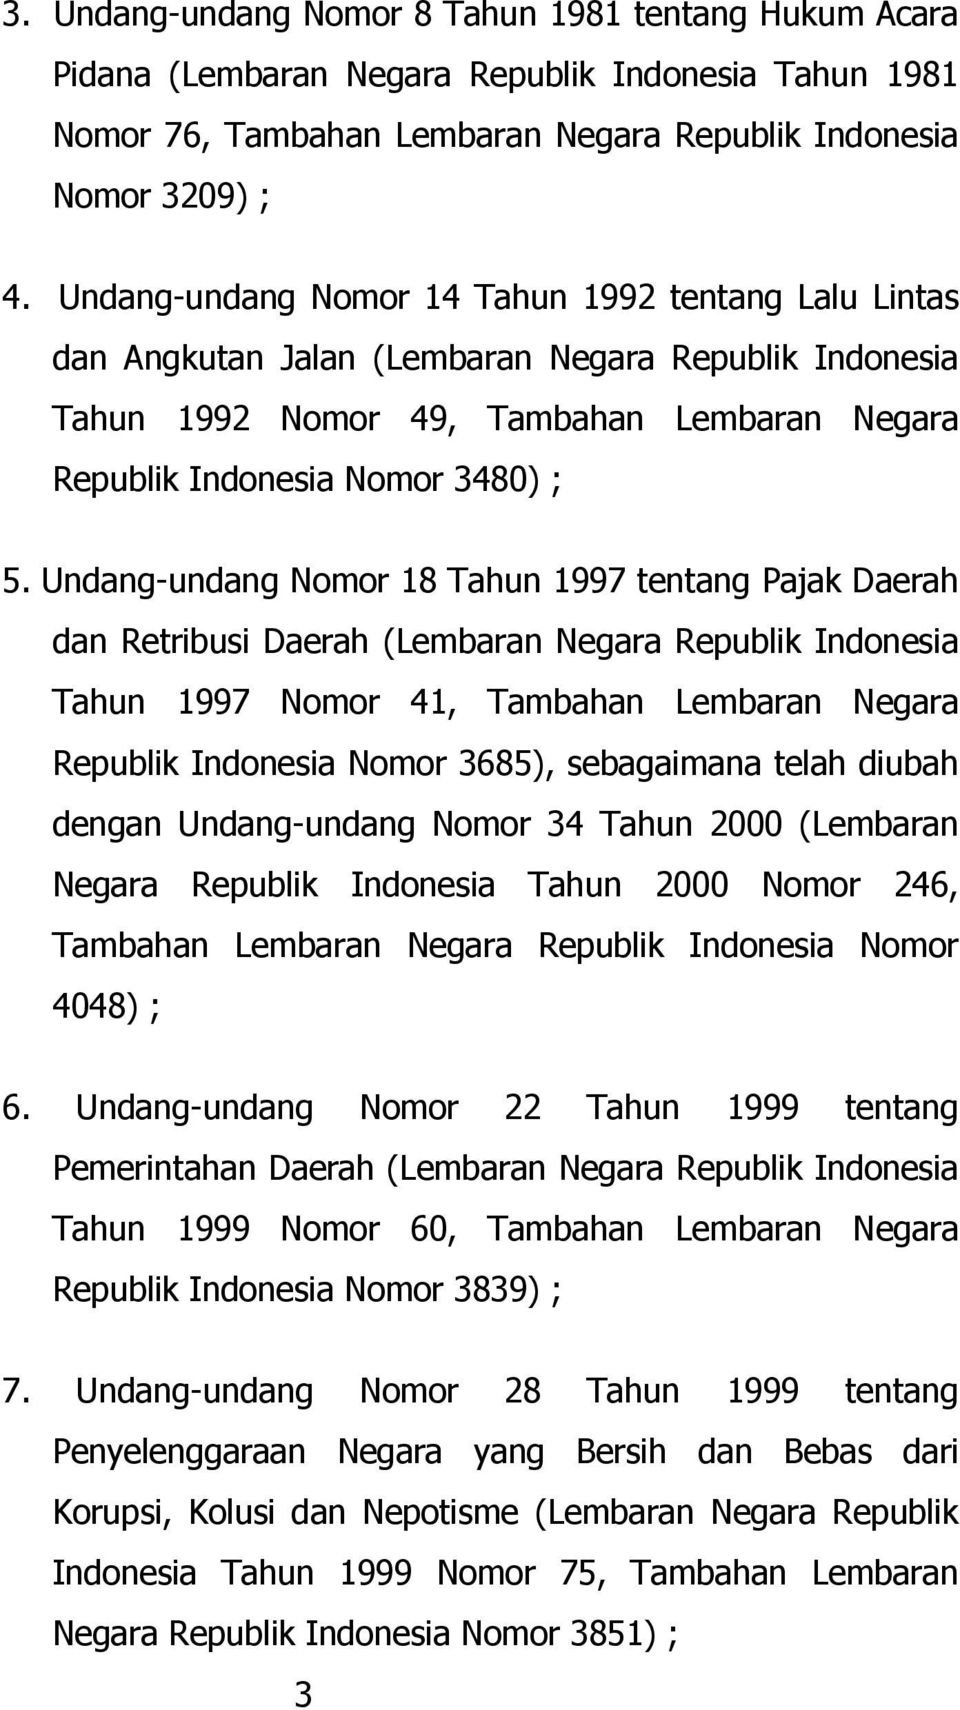 Undang-undang Nomor 18 Tahun 1997 tentang Pajak Daerah dan Retribusi Daerah (Lembaran Negara Republik Indonesia Tahun 1997 Nomor 41, Tambahan Lembaran Negara Republik Indonesia Nomor 3685),